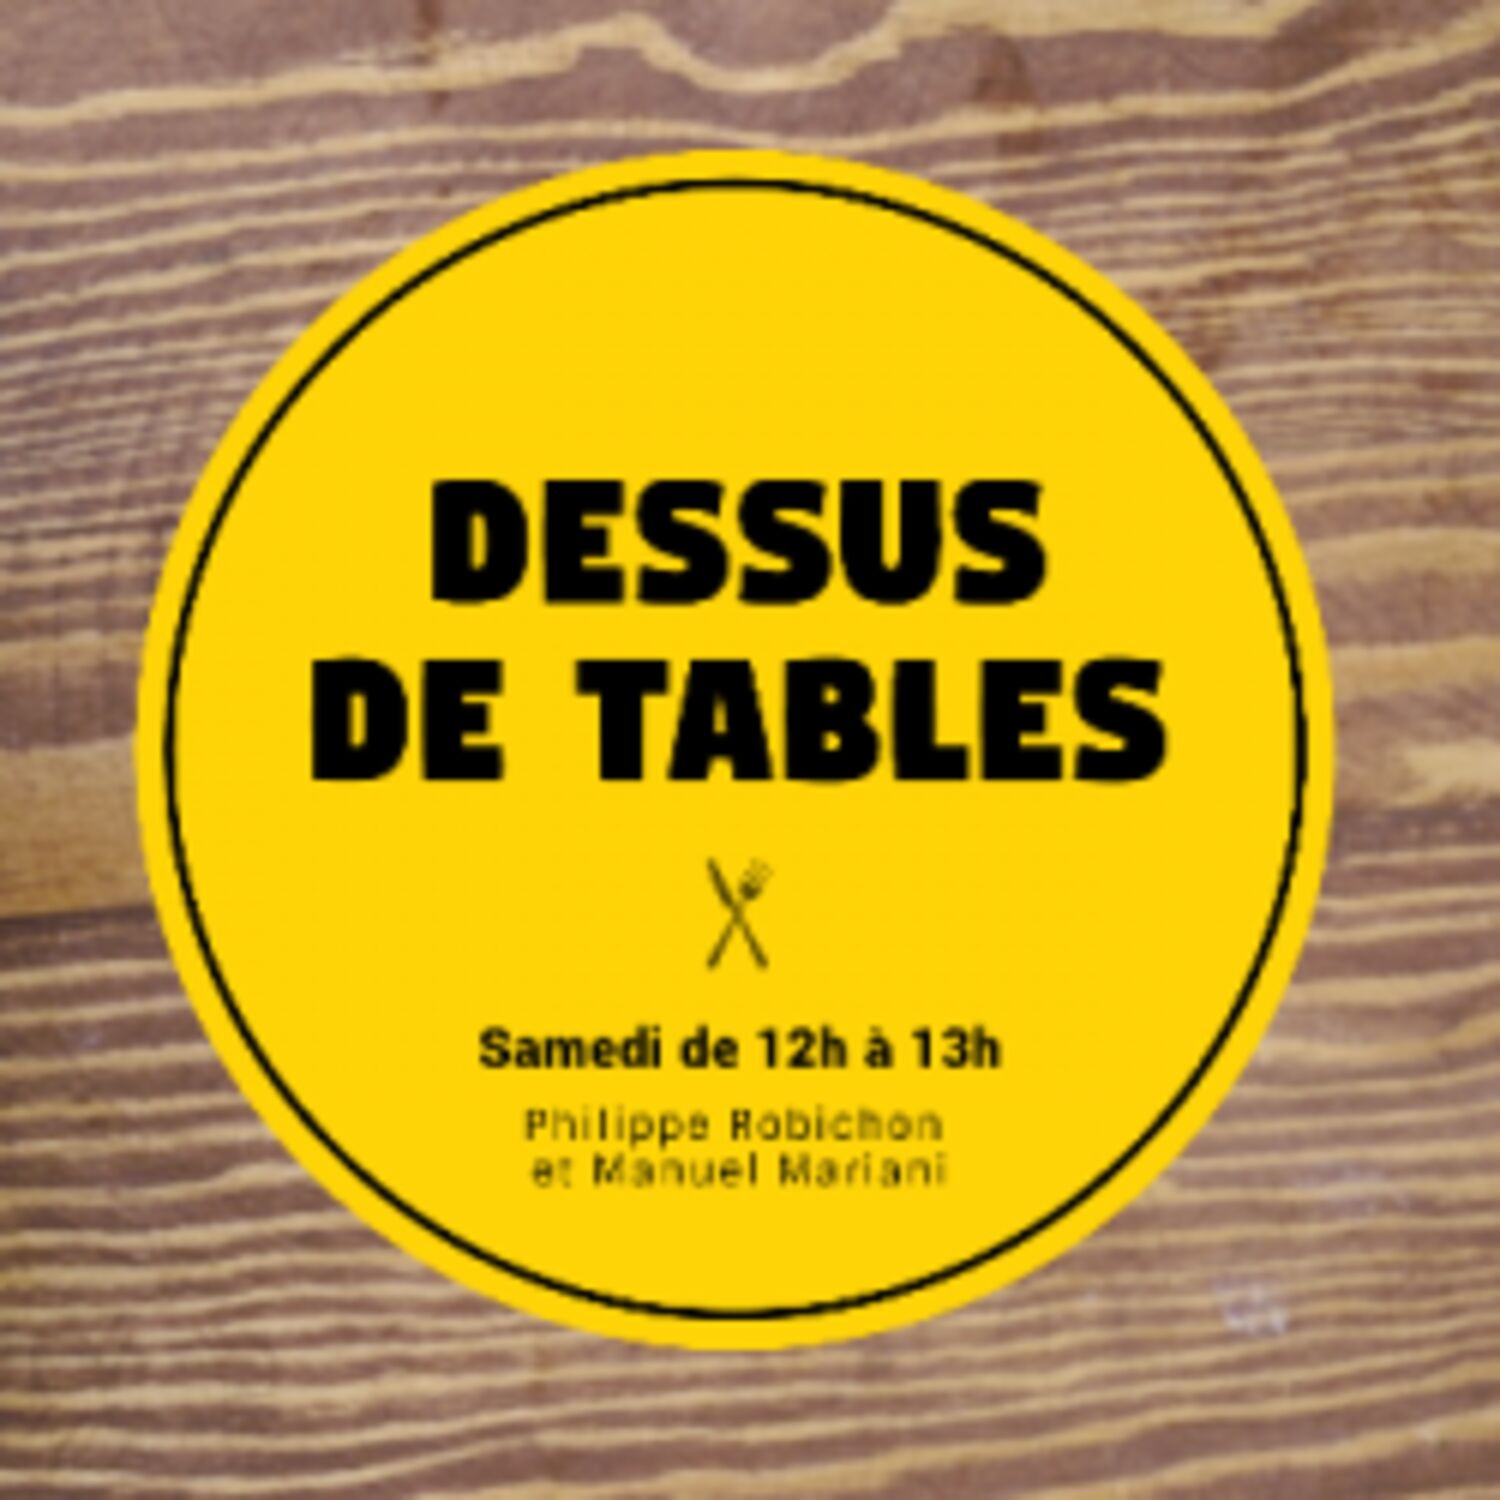 Dessus de tables 26-12-2020